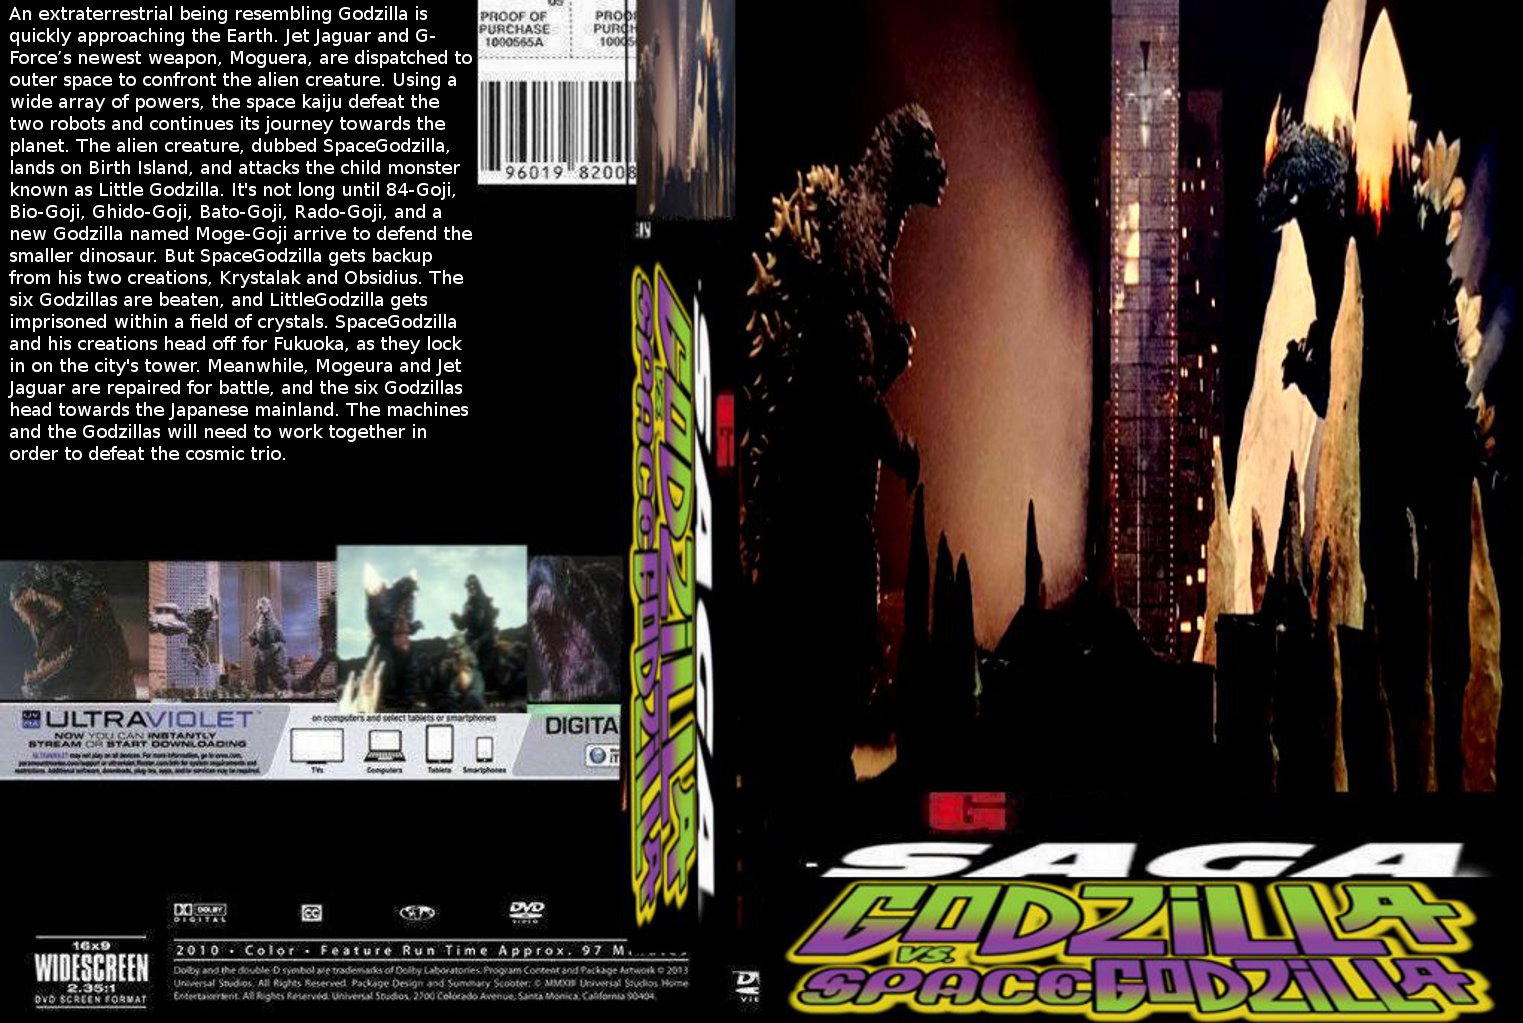 Godzilla vs Spacegodzilla DVD cover by SteveIrwinFan96 on DeviantArt